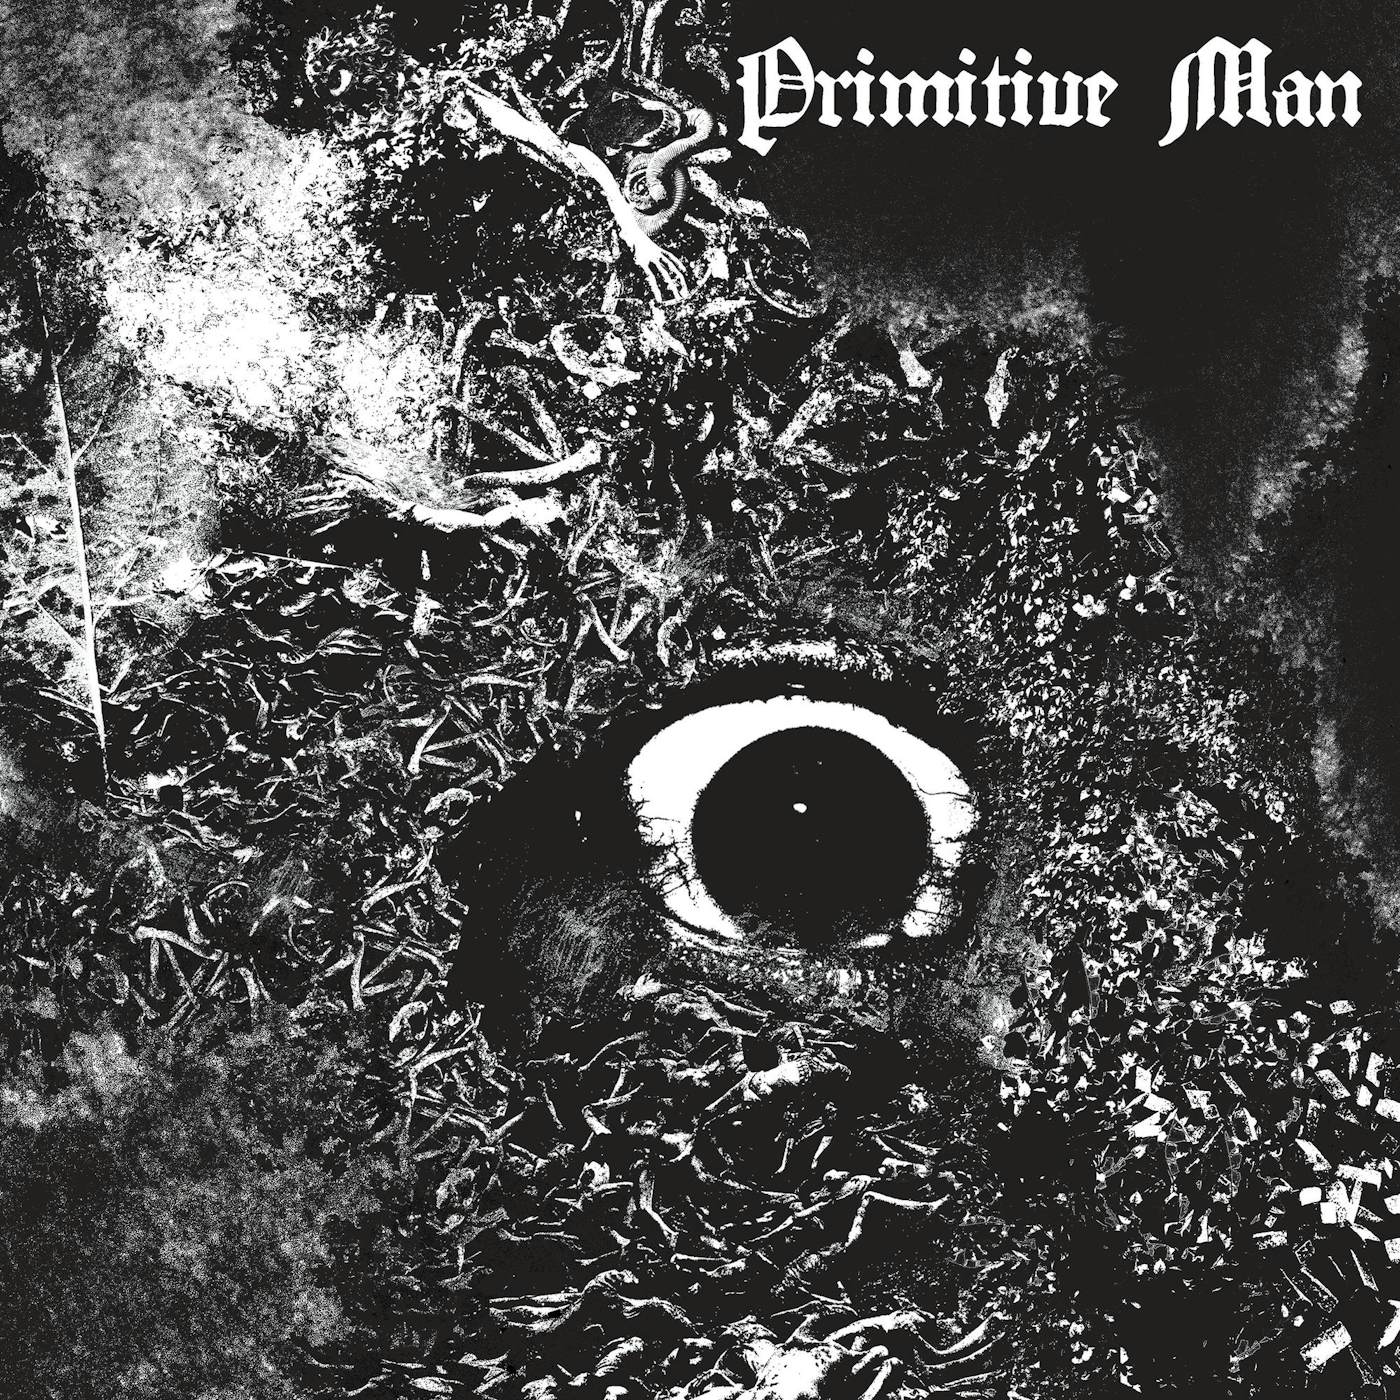 Primitive Man Immersion Vinyl Record